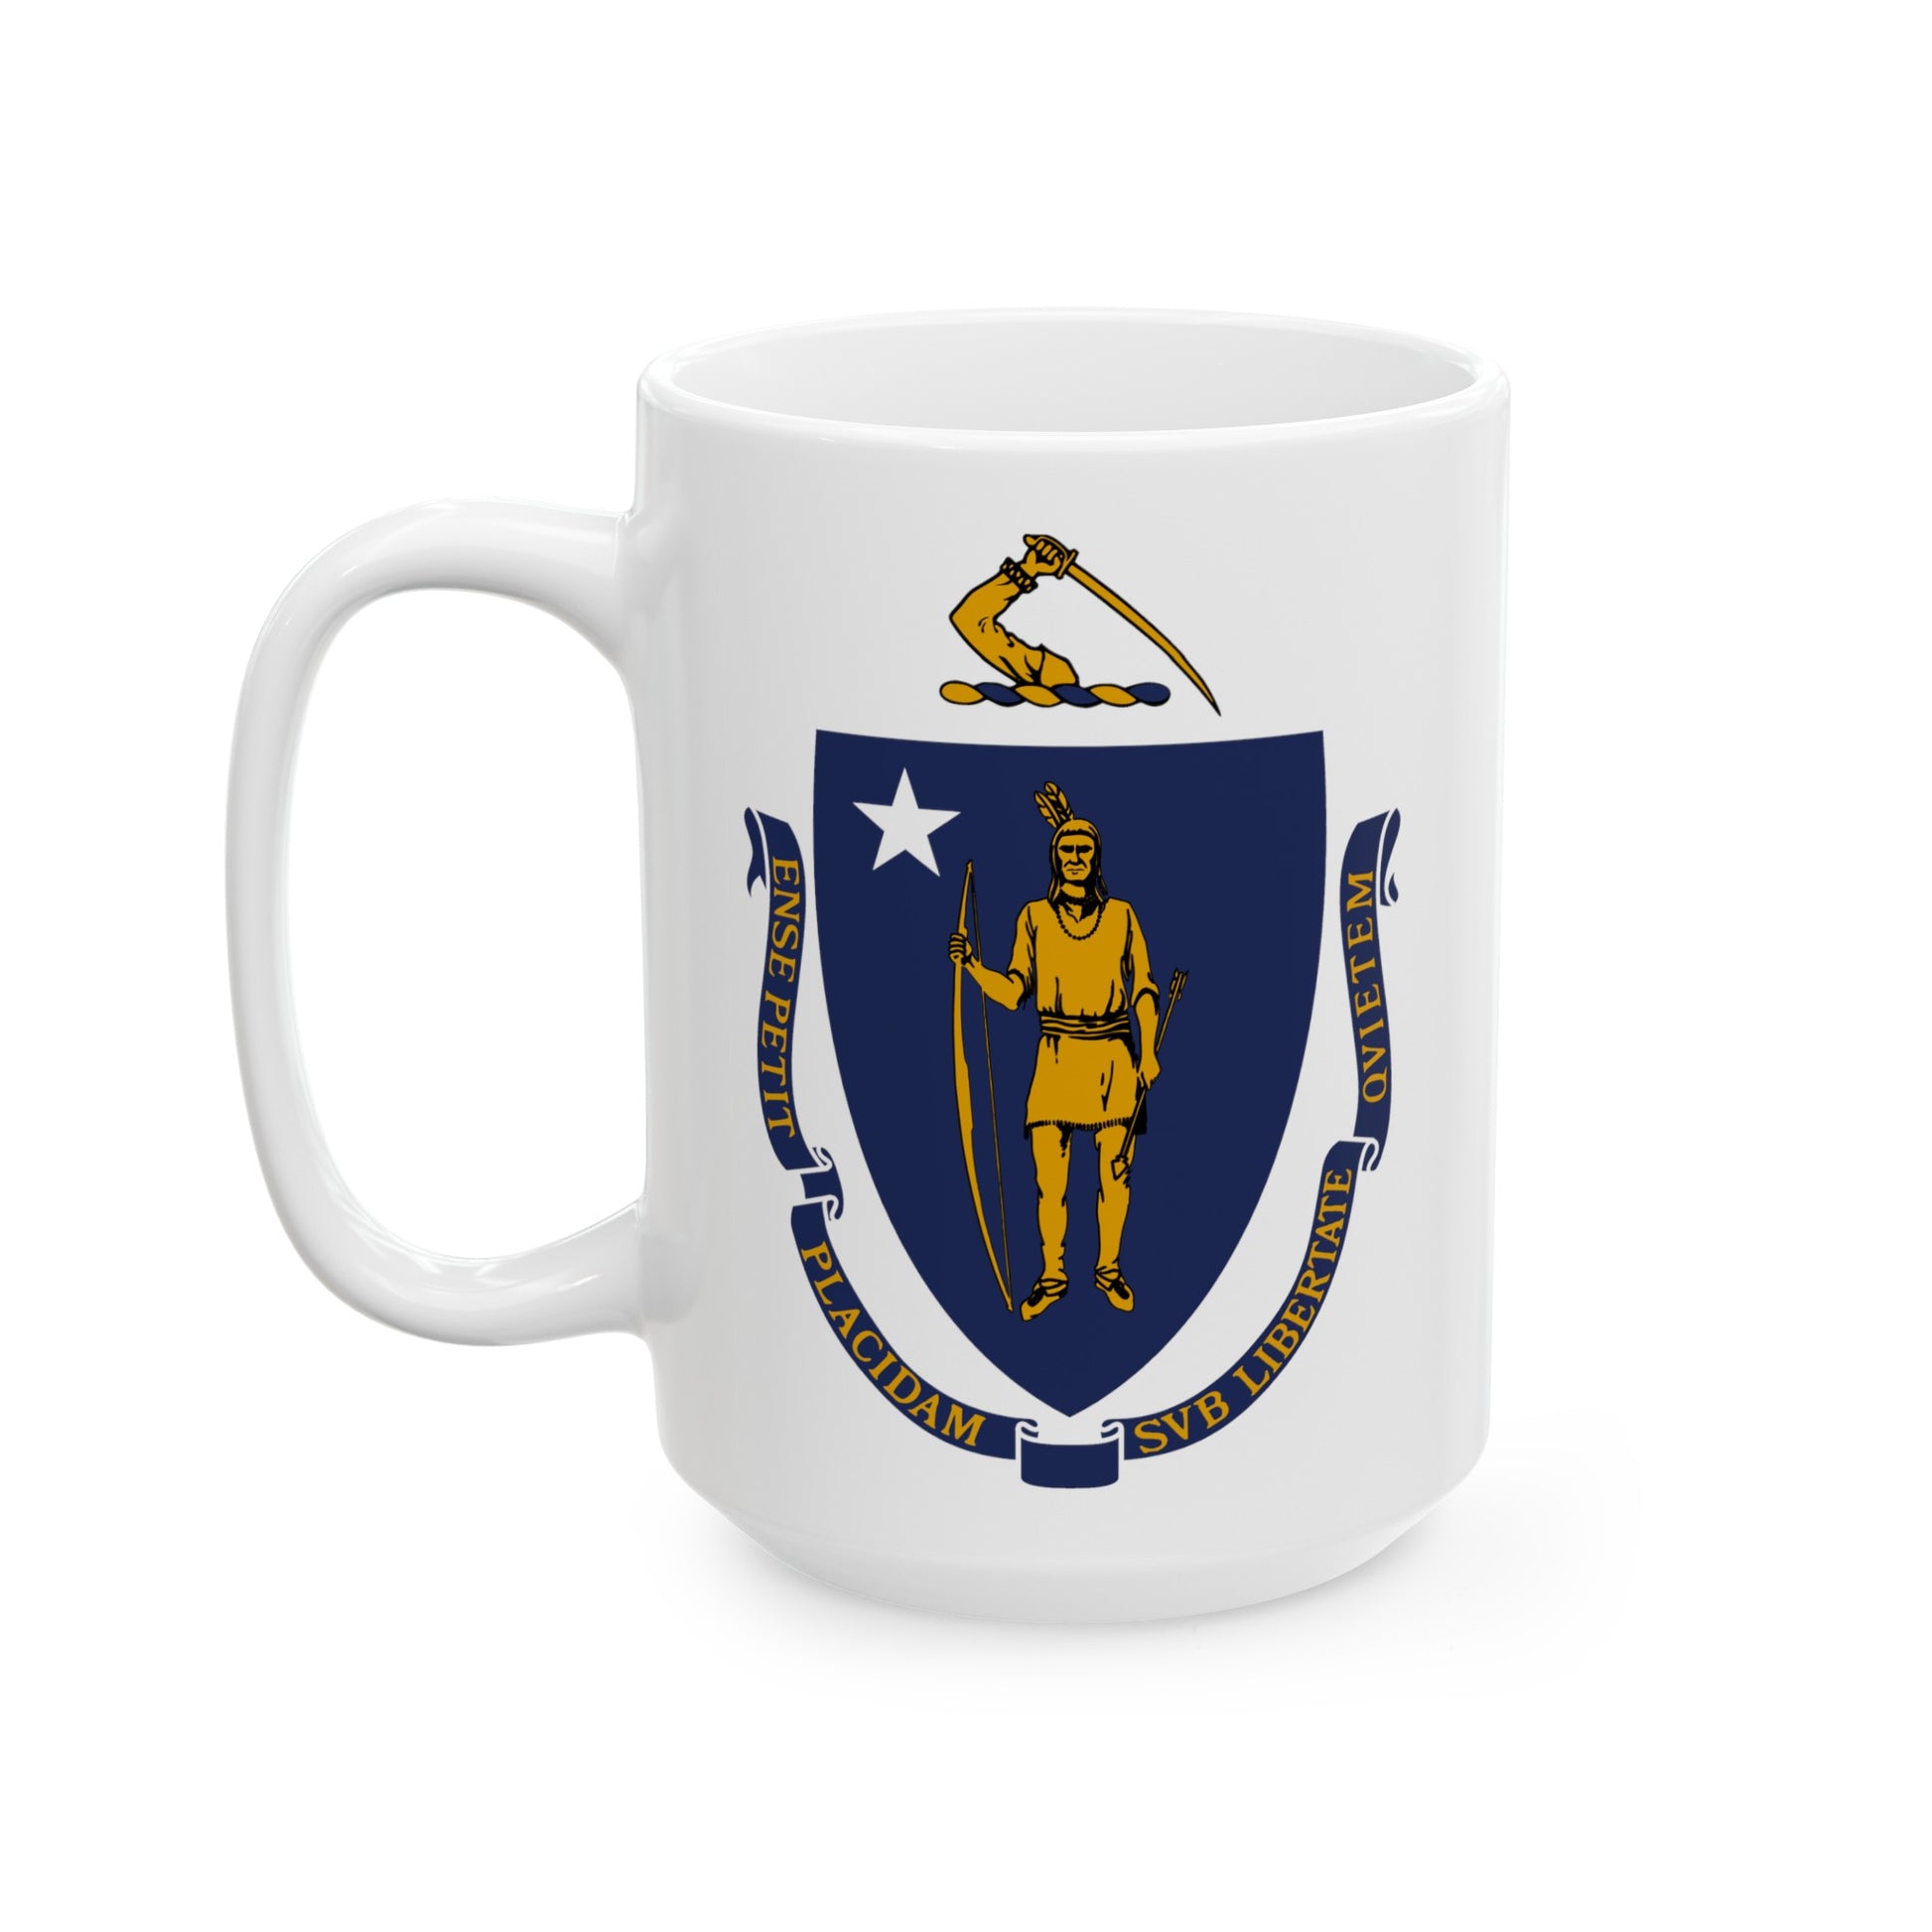 Commonwealth of Massachusetts State Flag - Double Sided White Ceramic Coffee Mug 15oz by TheGlassyLass.com